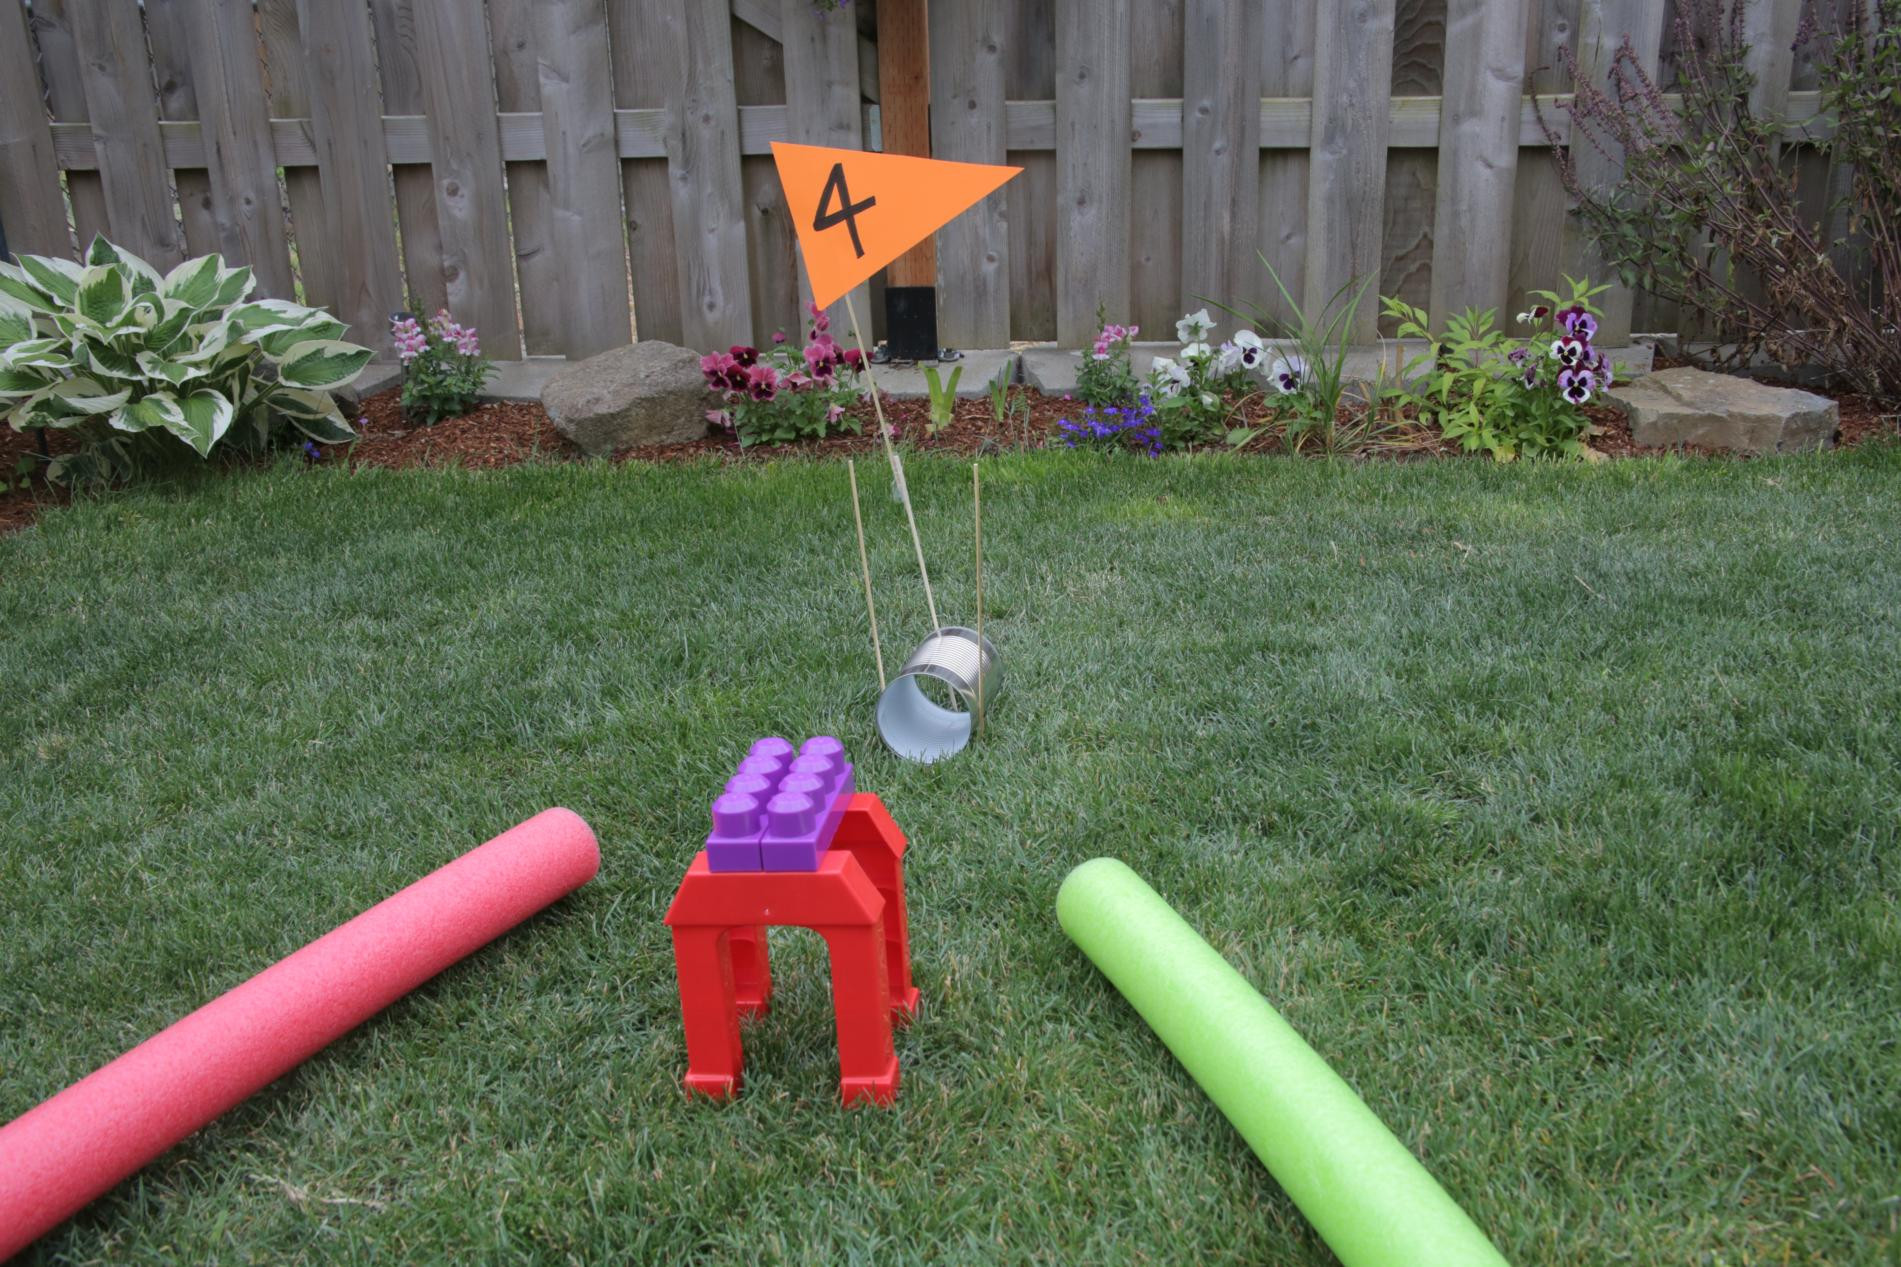 Best ideas about DIY Mini Golf
. Save or Pin Outdoor Fun Backyard Mini Golf Course · Kix Cereal Now.